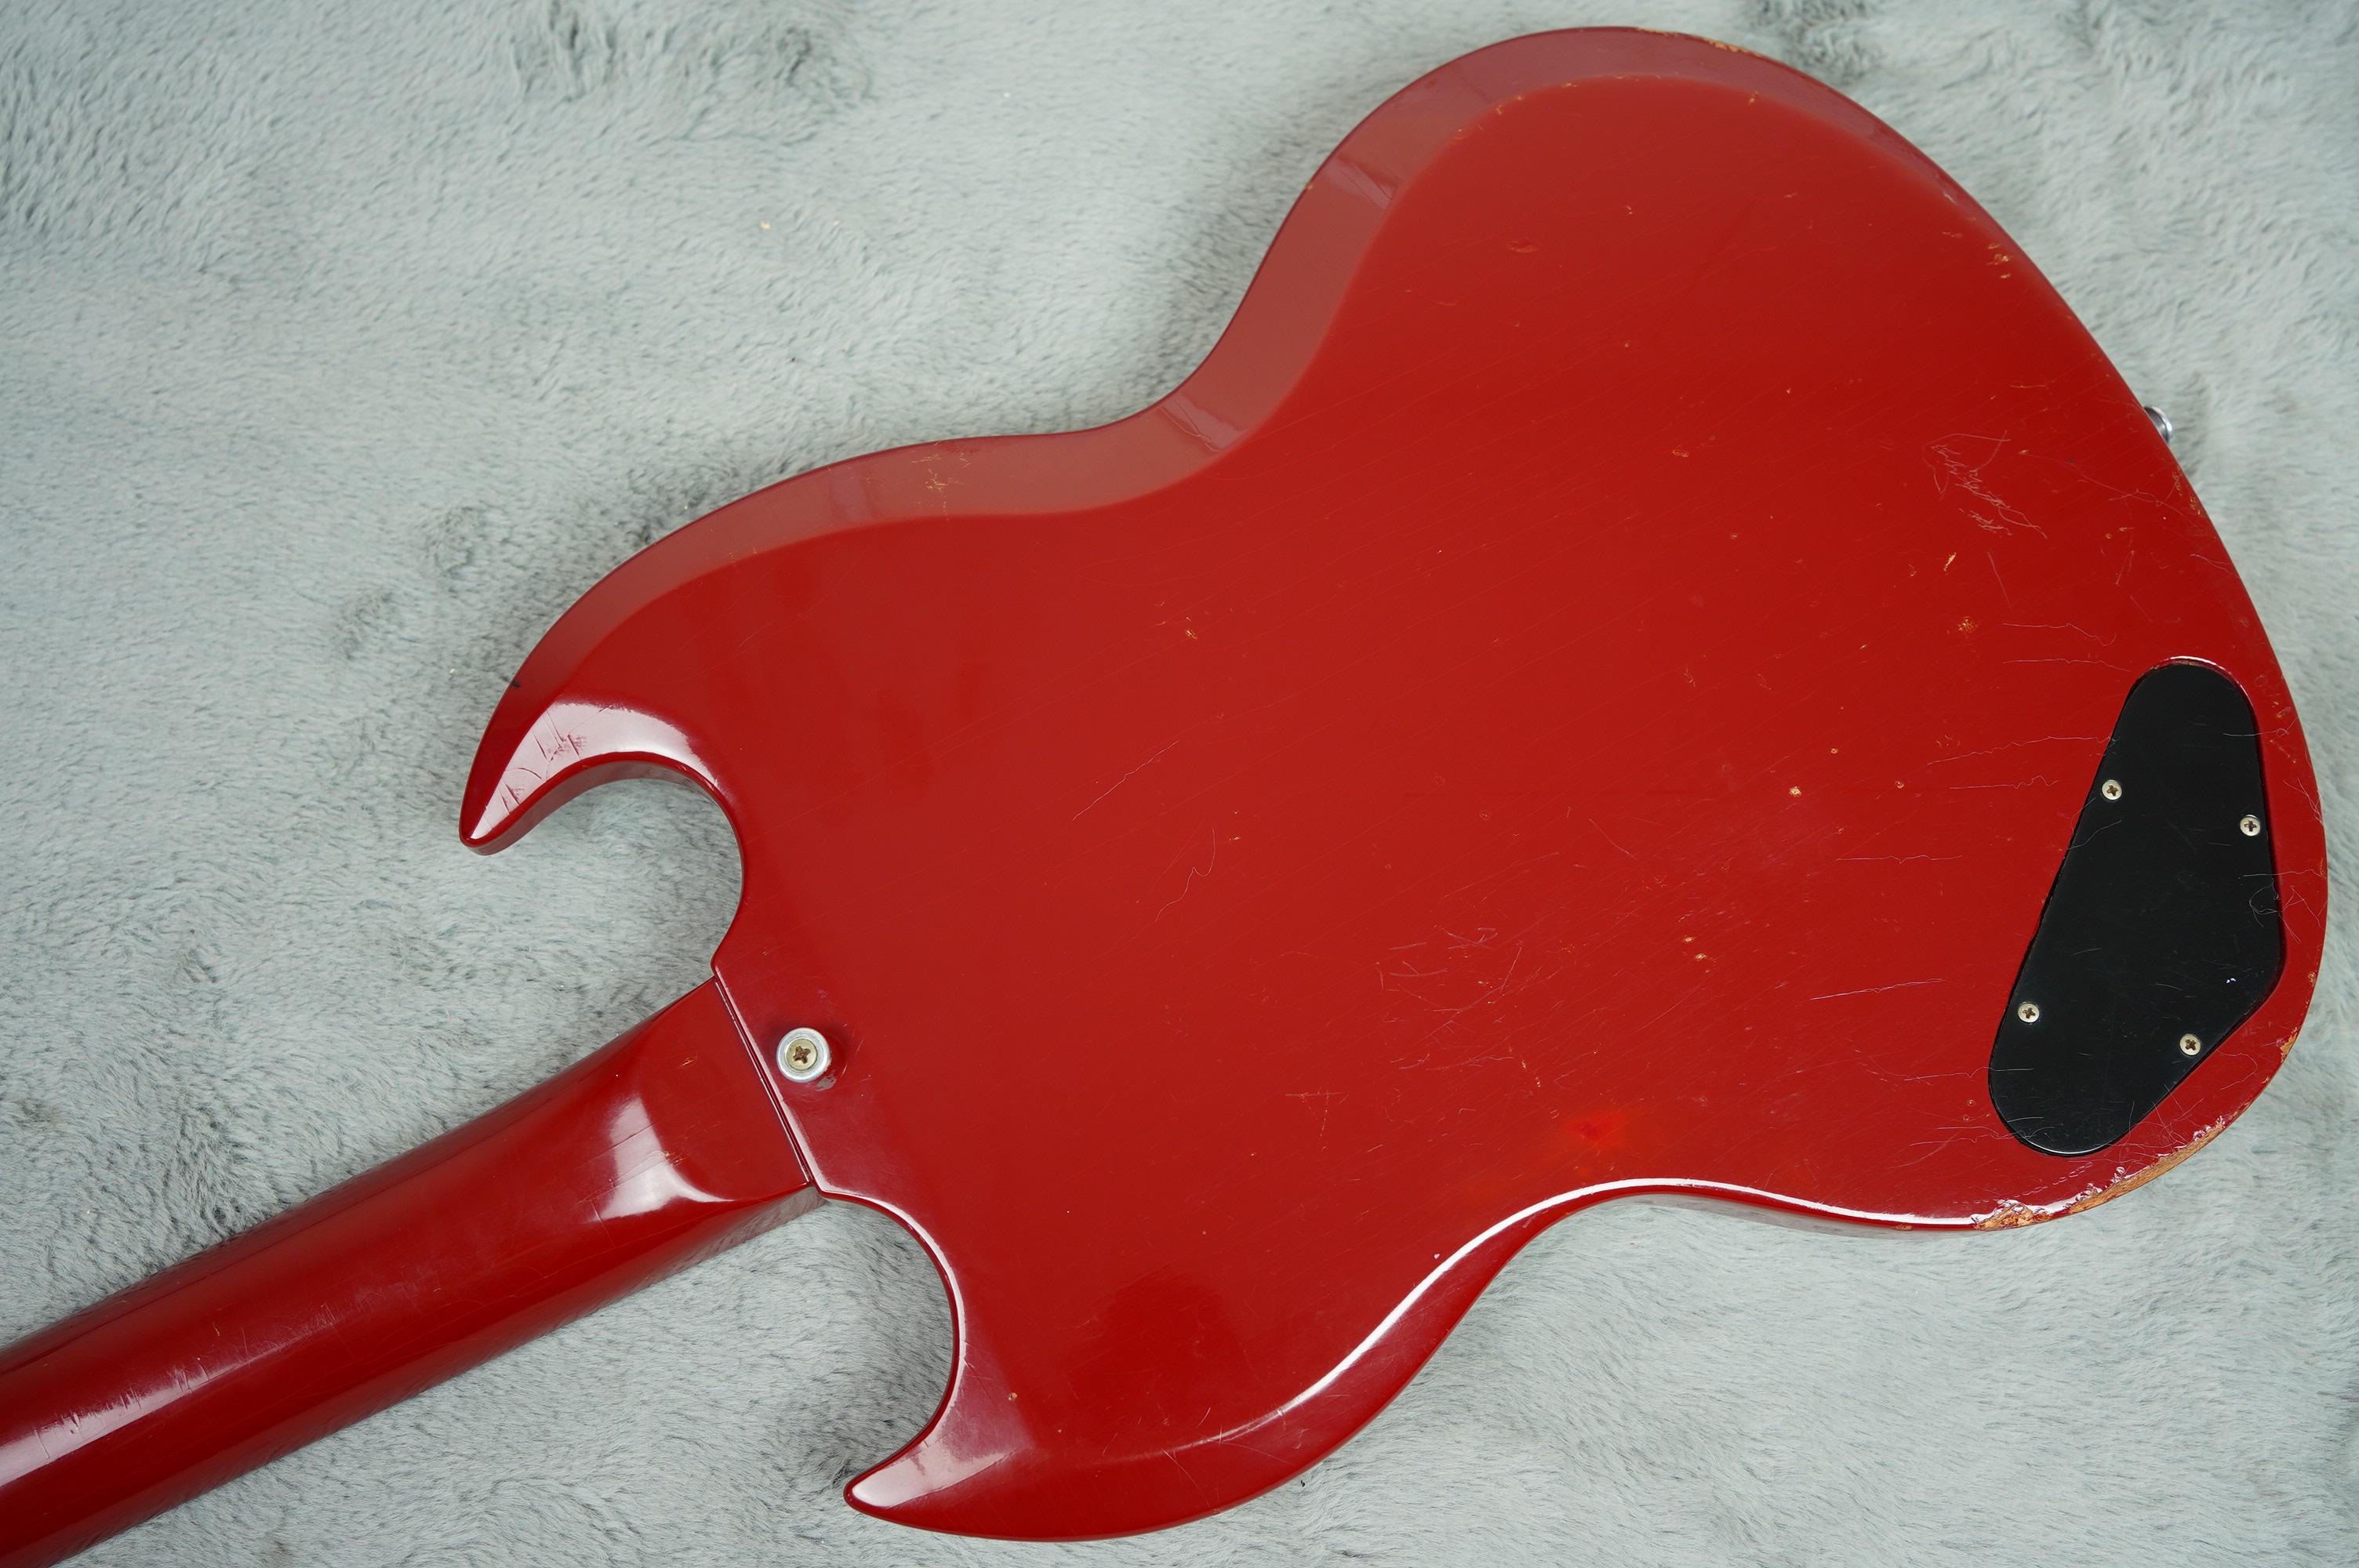 1965 Gibson Sg Junior Cardinal Red